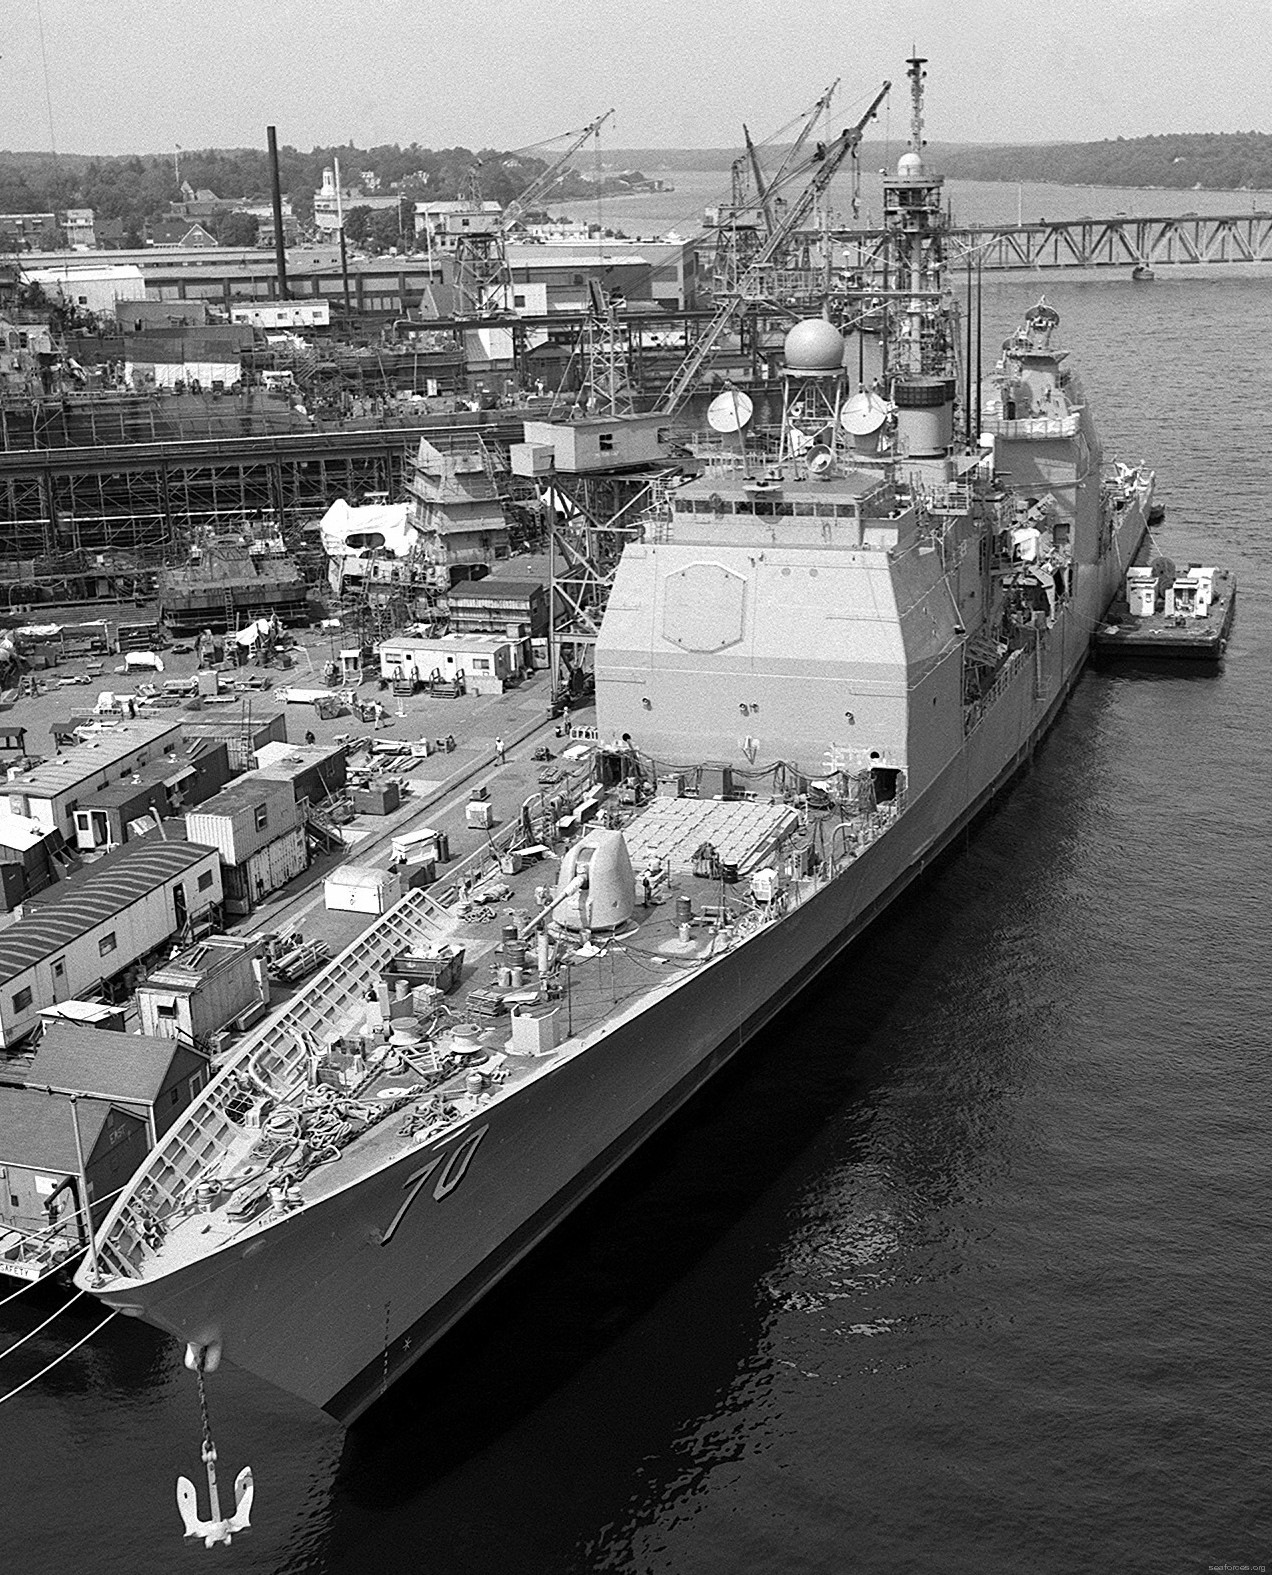 cg-70 uss lake erie ticonderoga class guided missile cruiser navy 114 bath iron works maine